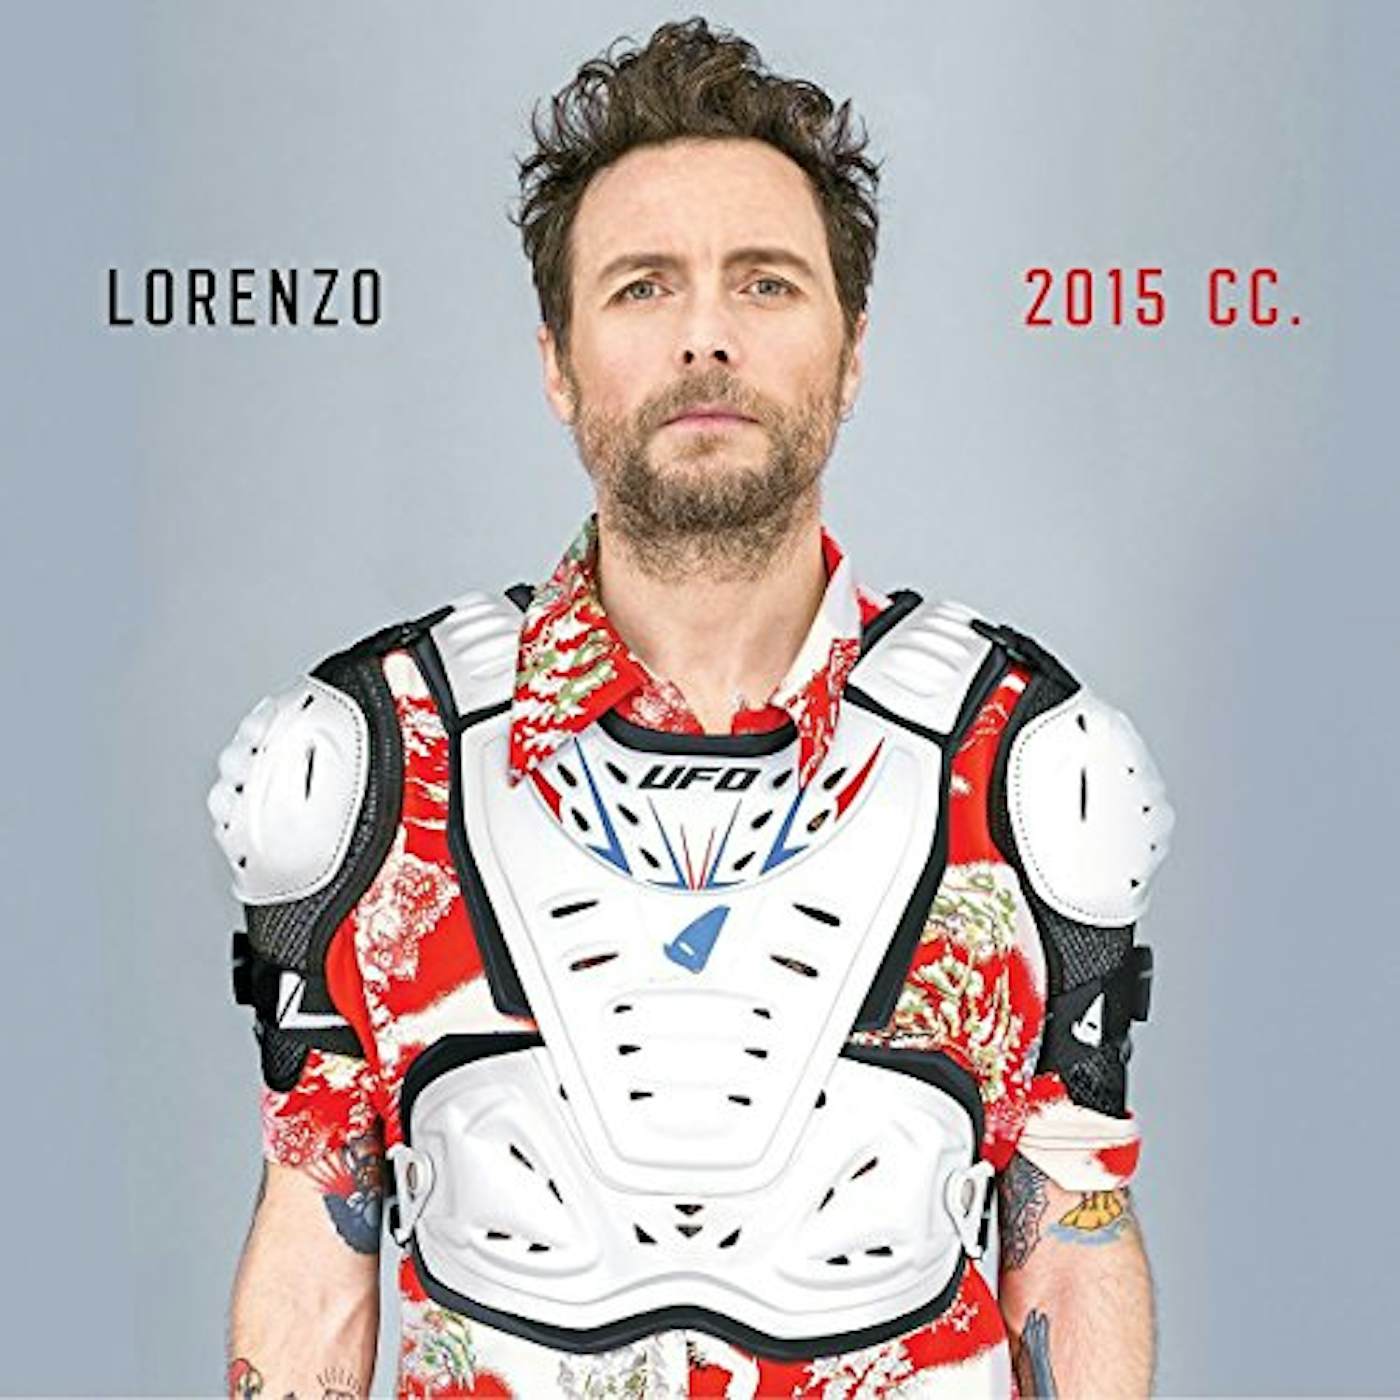 Jovanotti LORENZO 2015 CC. INTERNATIONAL EDITION CD